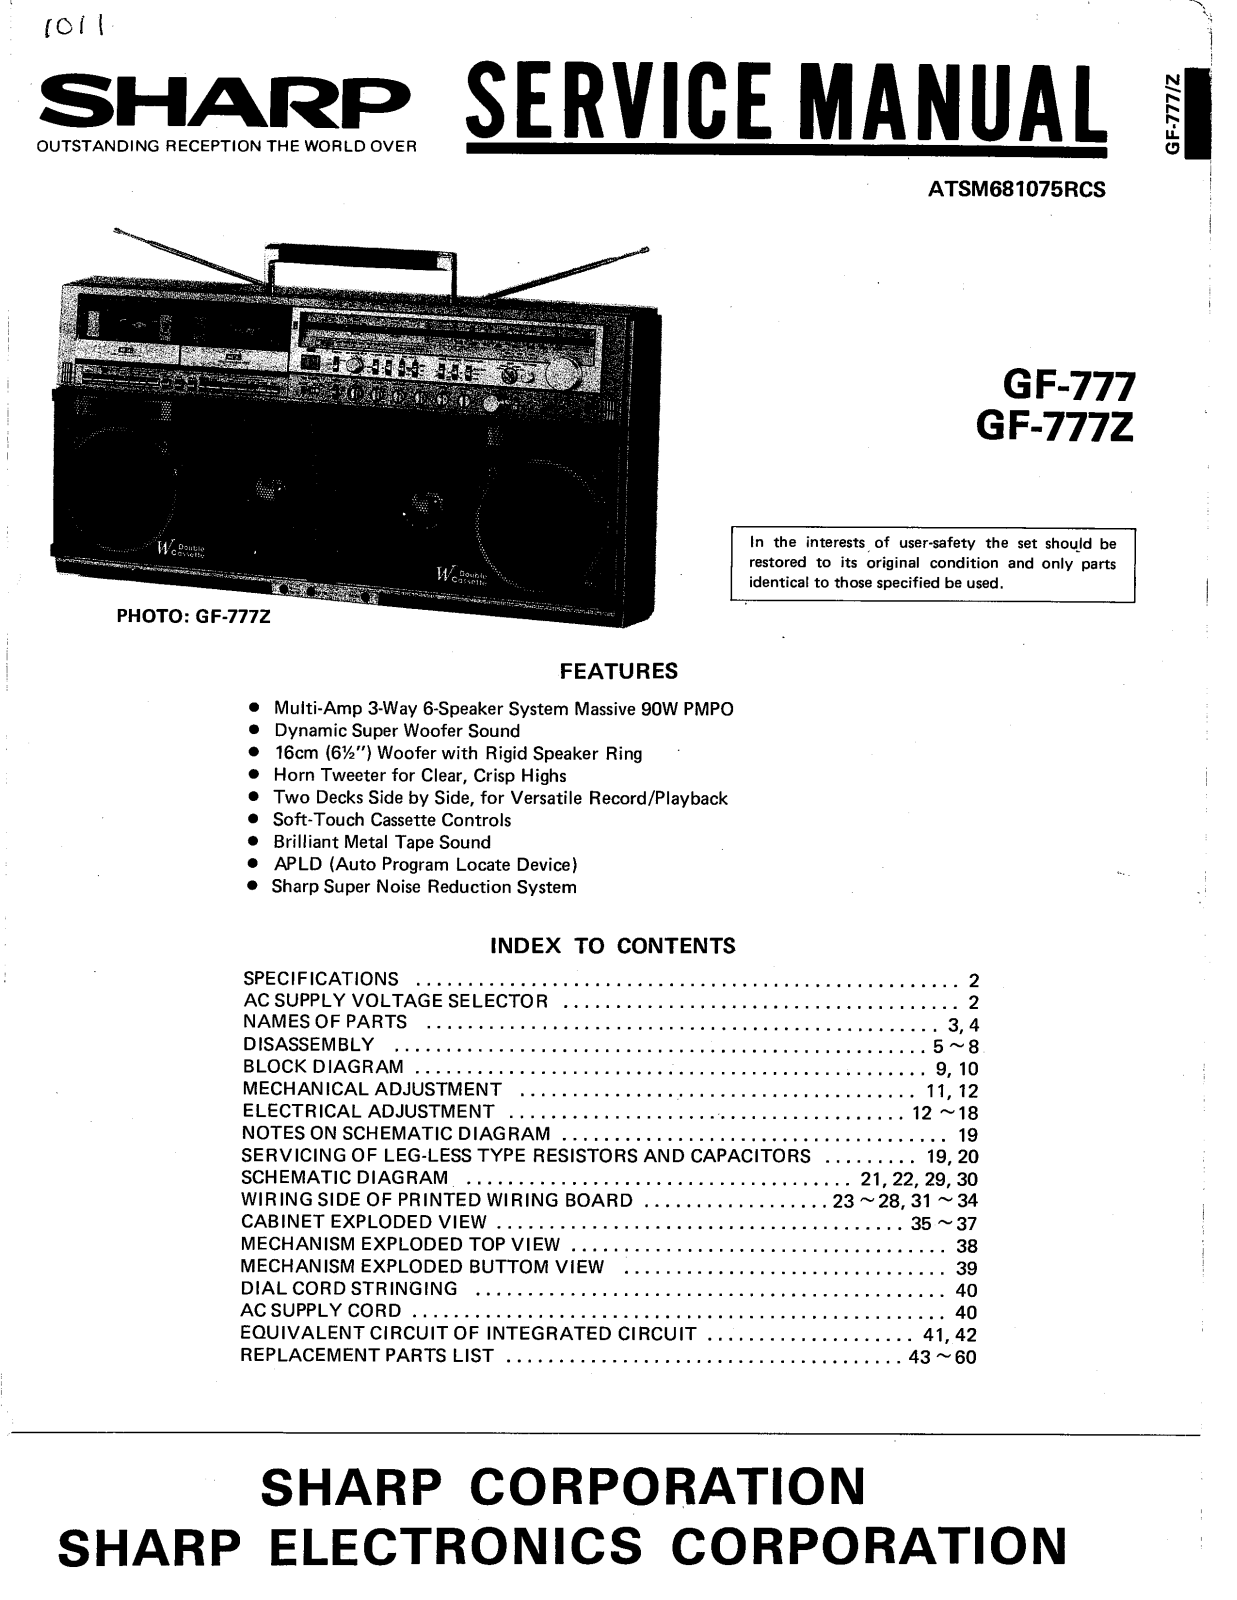 Sharp GF-777, GF-777Z Service manual